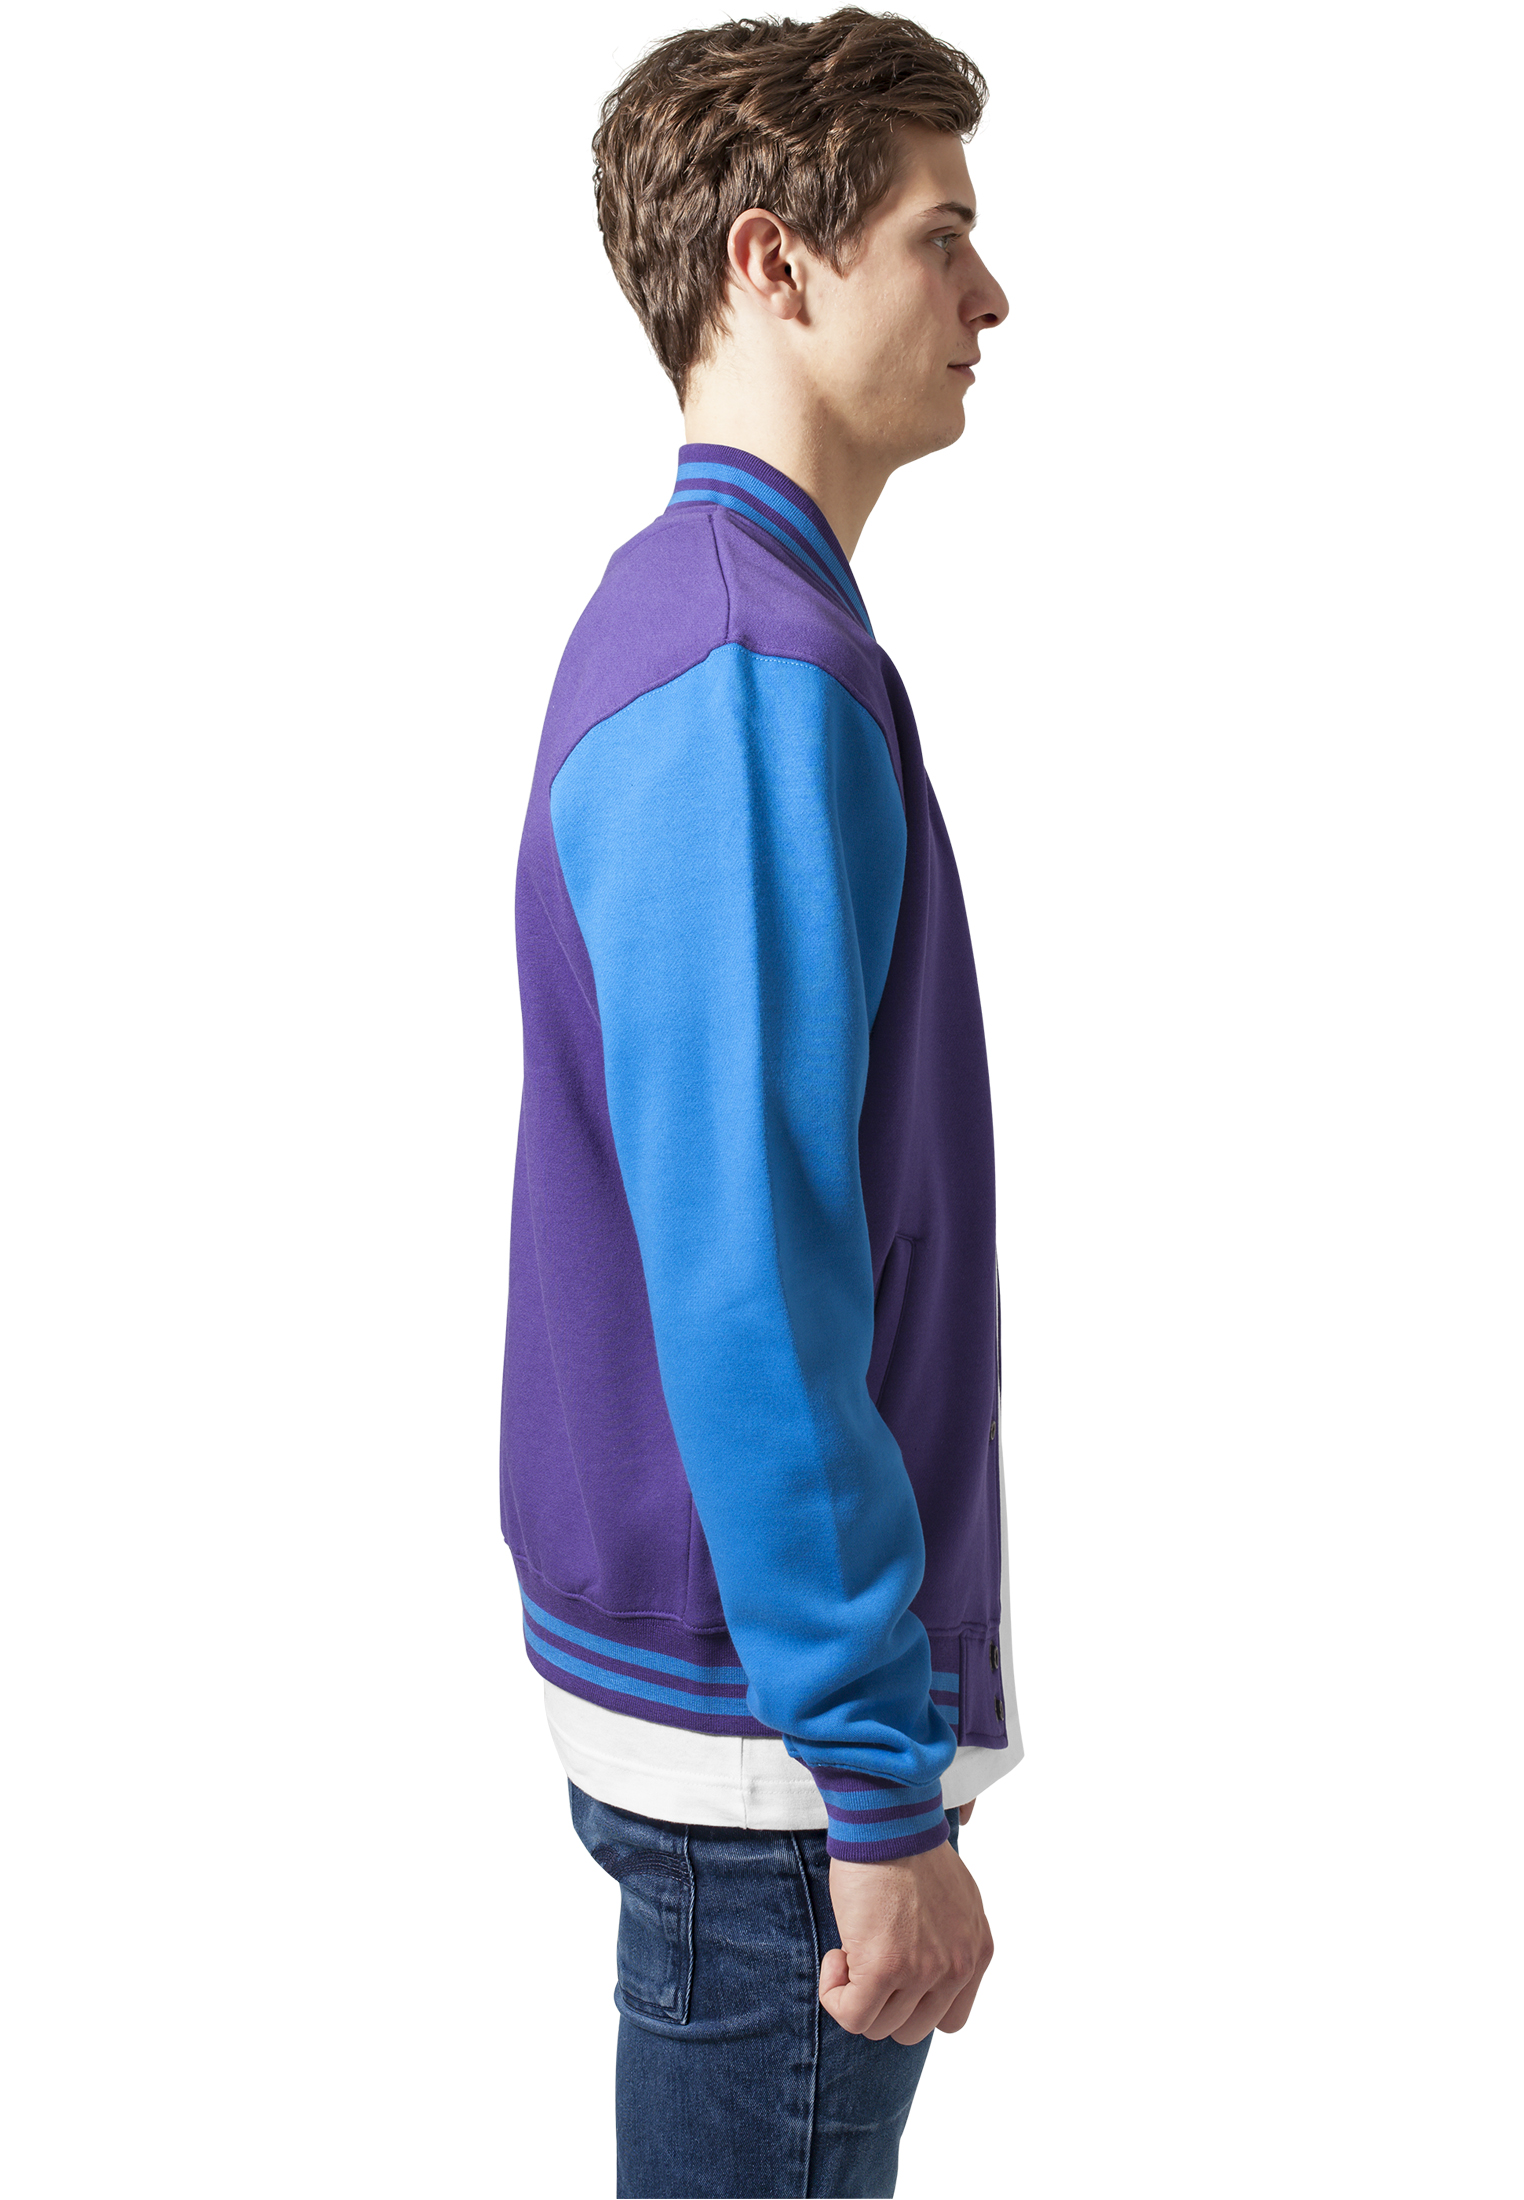 College Jacken 2-tone College Sweatjacket in Farbe pur/tur